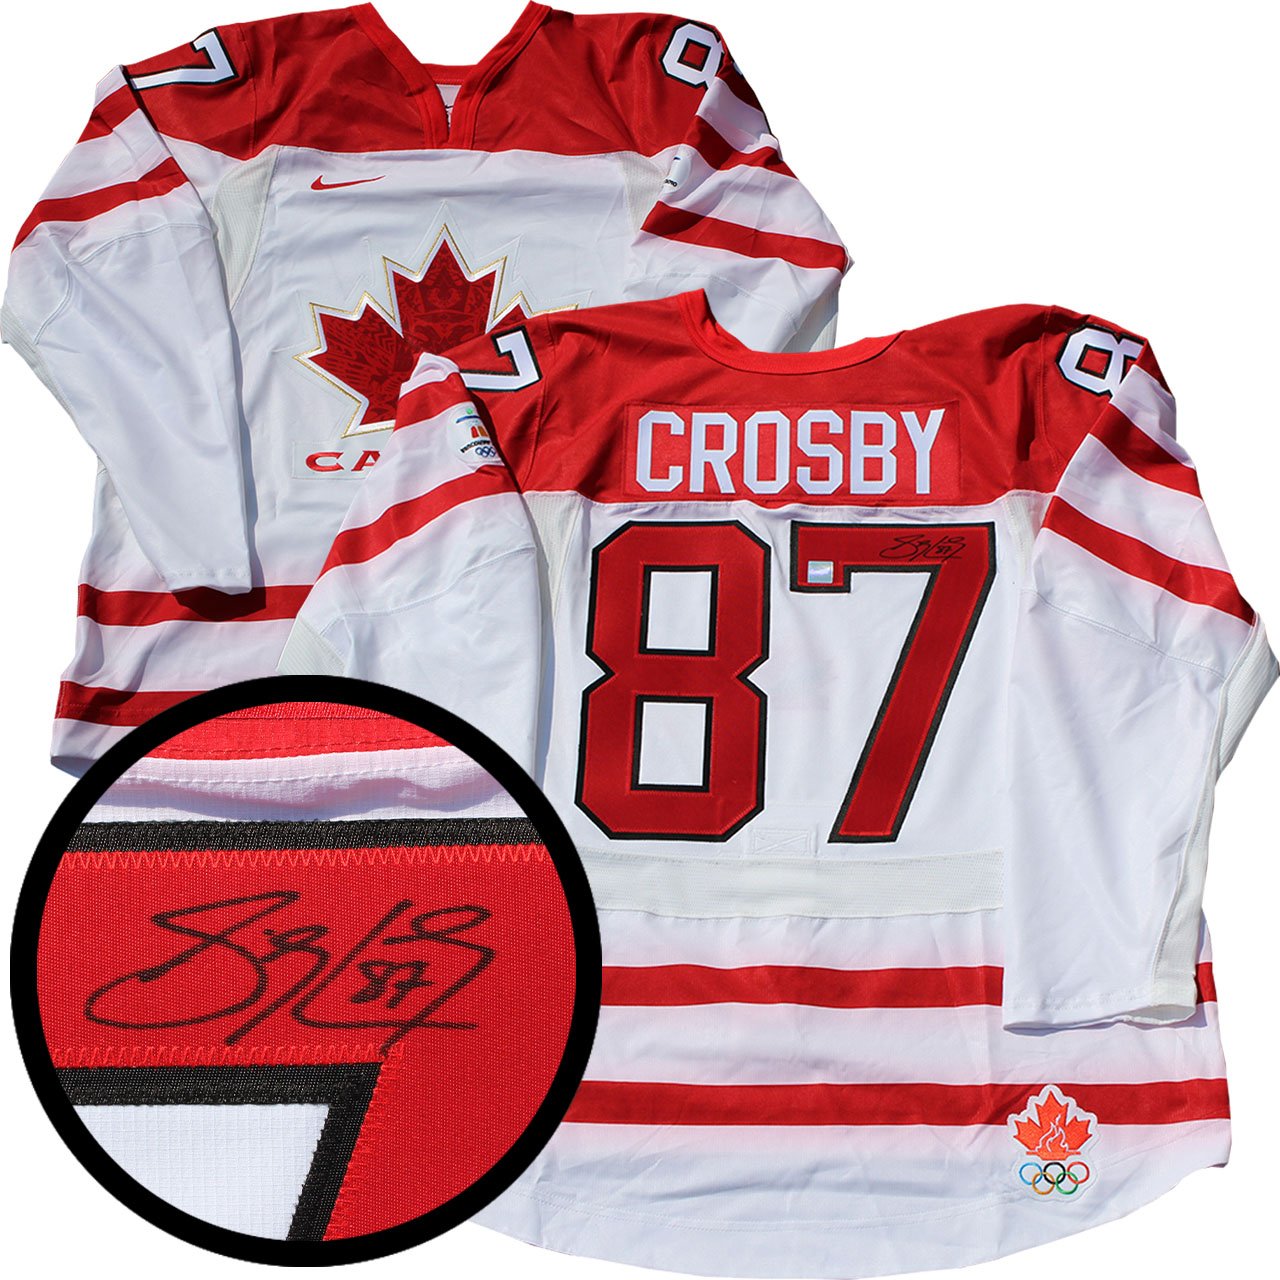 sidney crosby signed jersey ebay